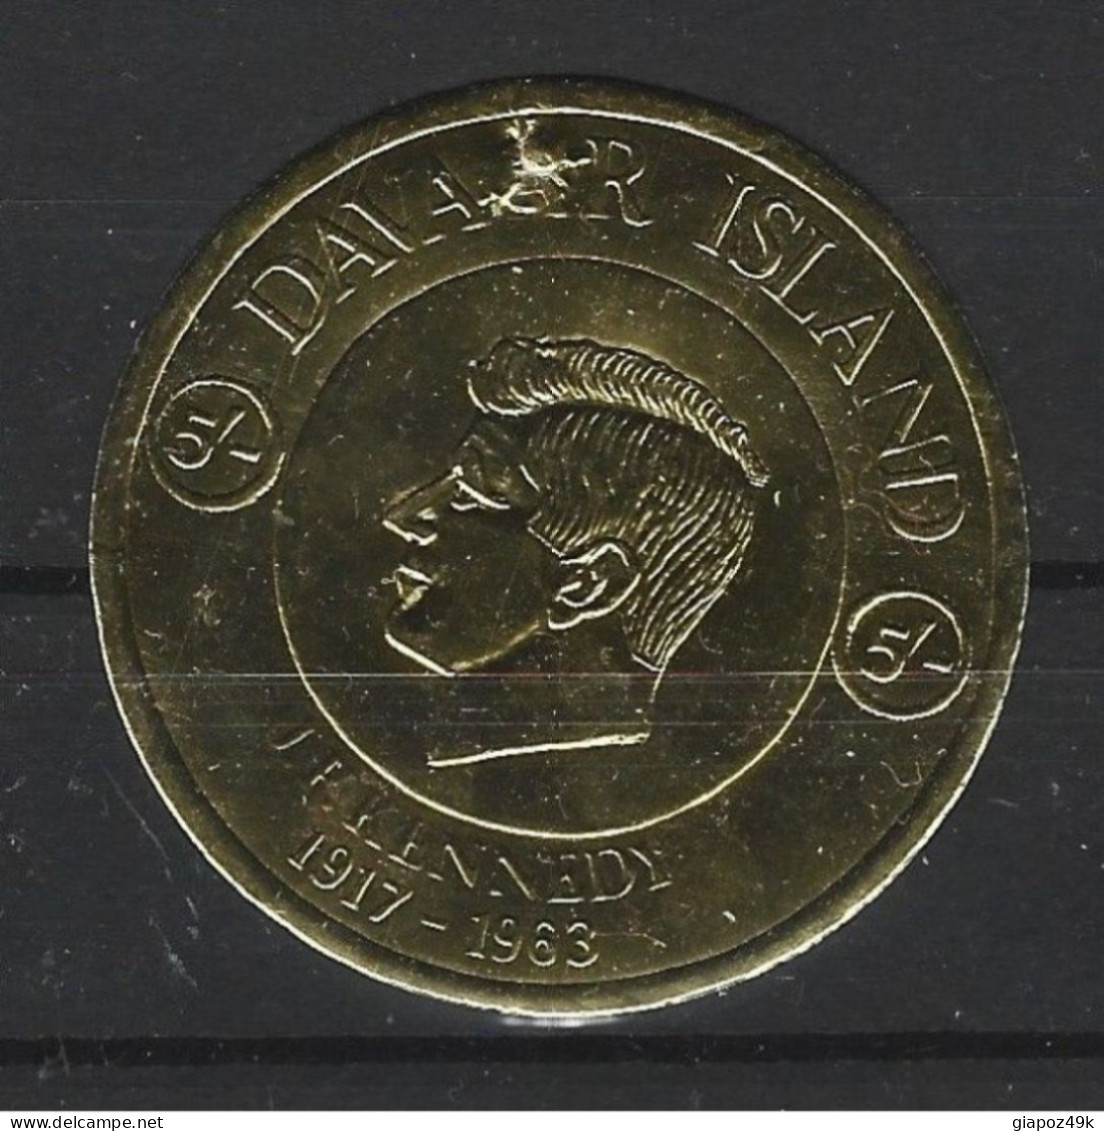 ● Davaar Island 1965 ֍ J F Kennedy ● Lamina D'ORO ● GOLD ● NON Dentellato * ● £ 5 ● N. 2455 ● - Local Issues